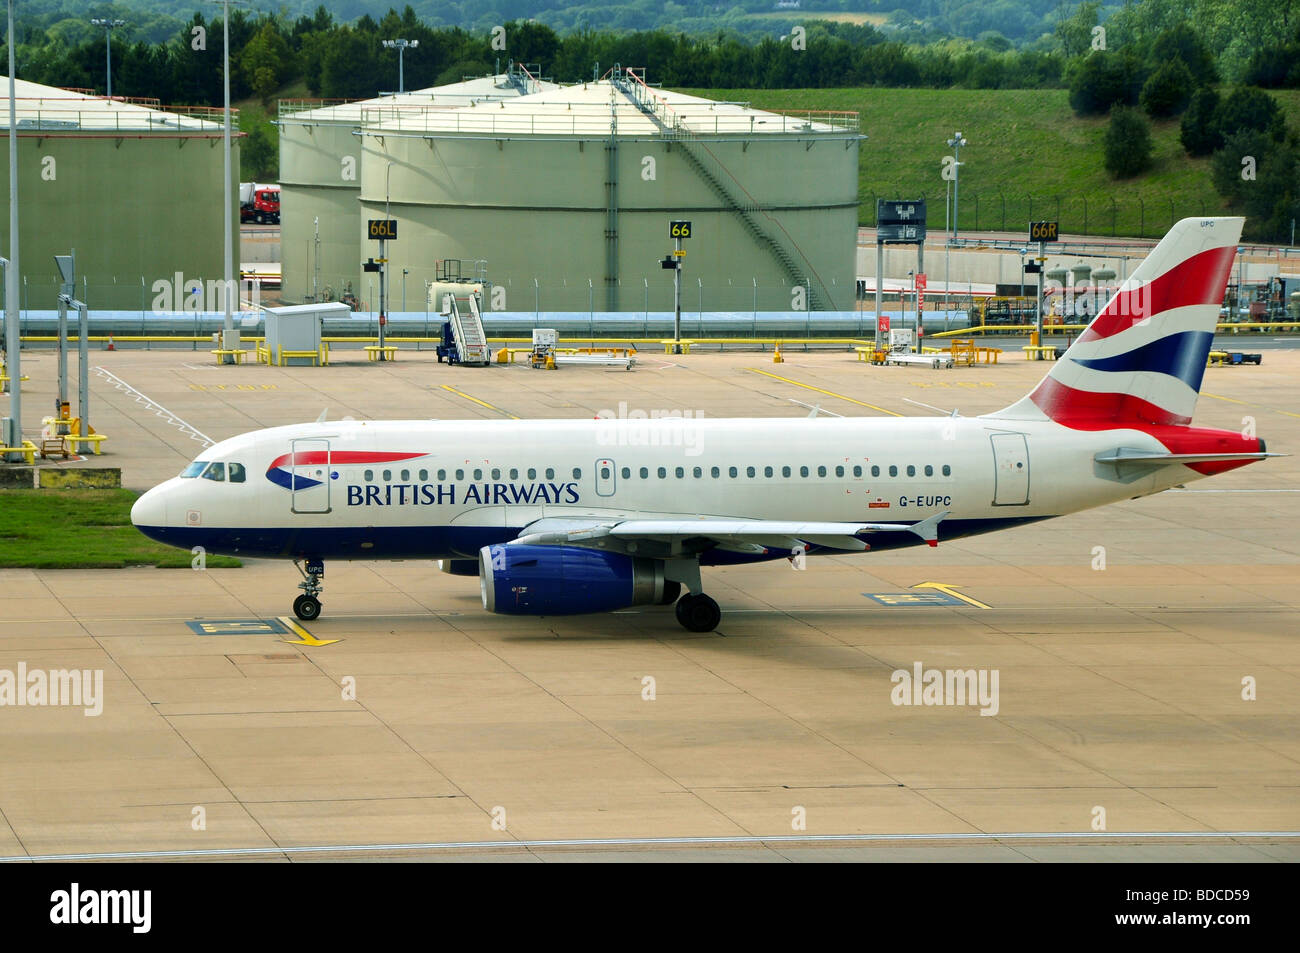 British Airways AIrbus A319 plane at Gatwick Airport, London, England Stock Photo